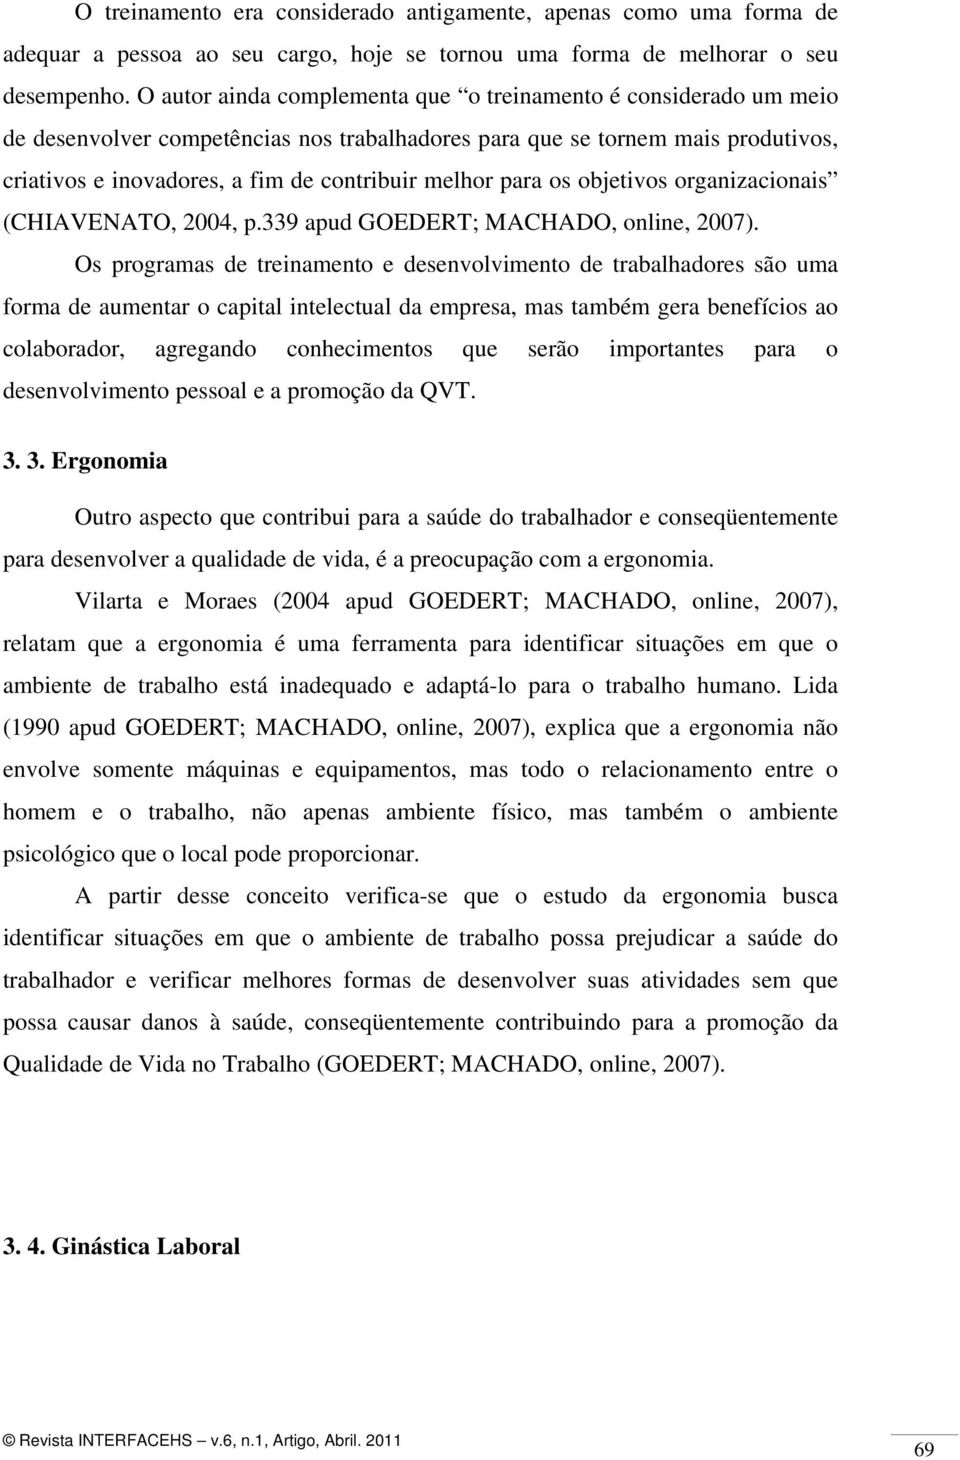 para os objetivos organizacionais (CHIAVENATO, 2004, p.339 apud GOEDERT; MACHADO, online, 2007).